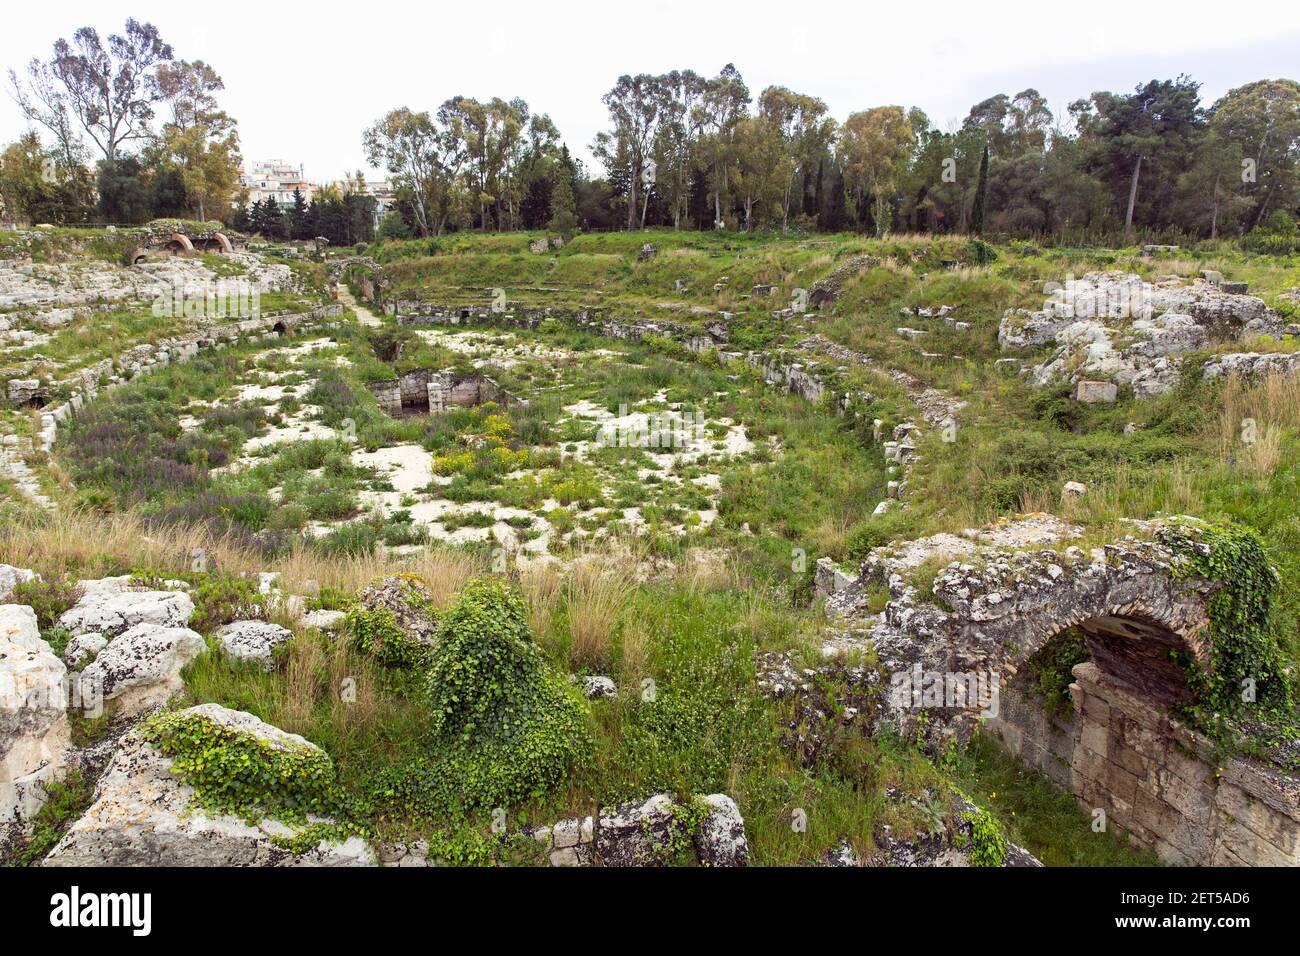 Italy,Sicily, Siracusa, Parco Archeologigo della Neapolis, Anfiteatro Roman, remains of a Roman arena built in 3rd Century AD Stock Photo